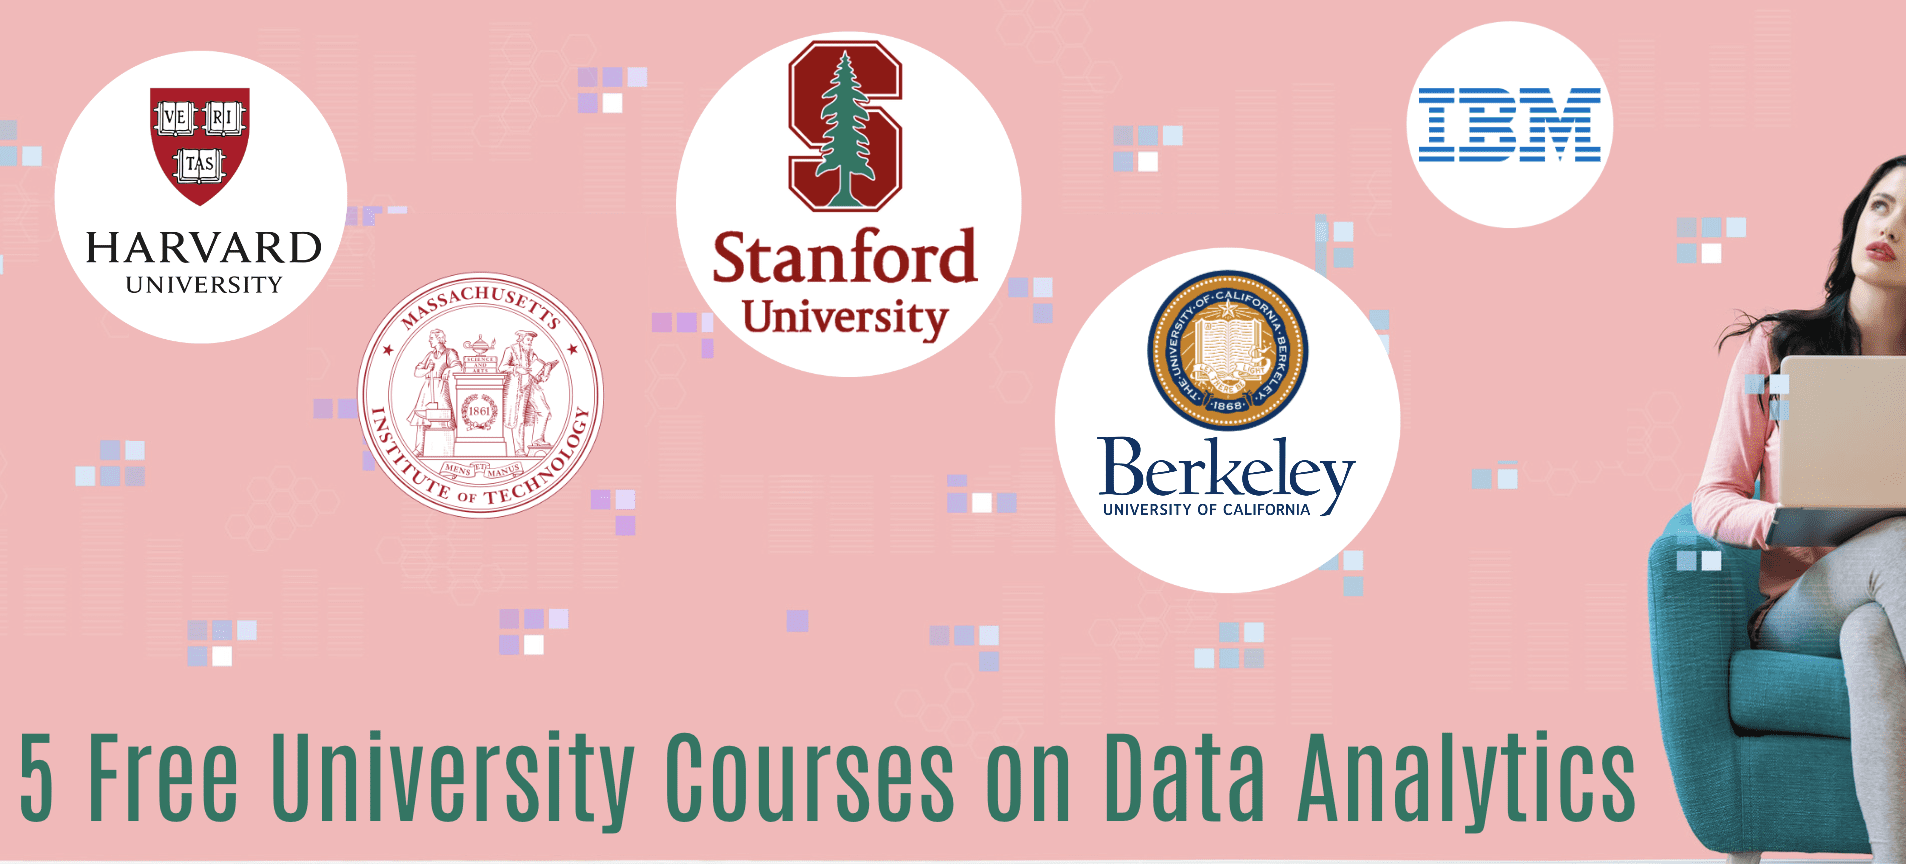 5 Free University Courses on Data Analytics - KDnuggets